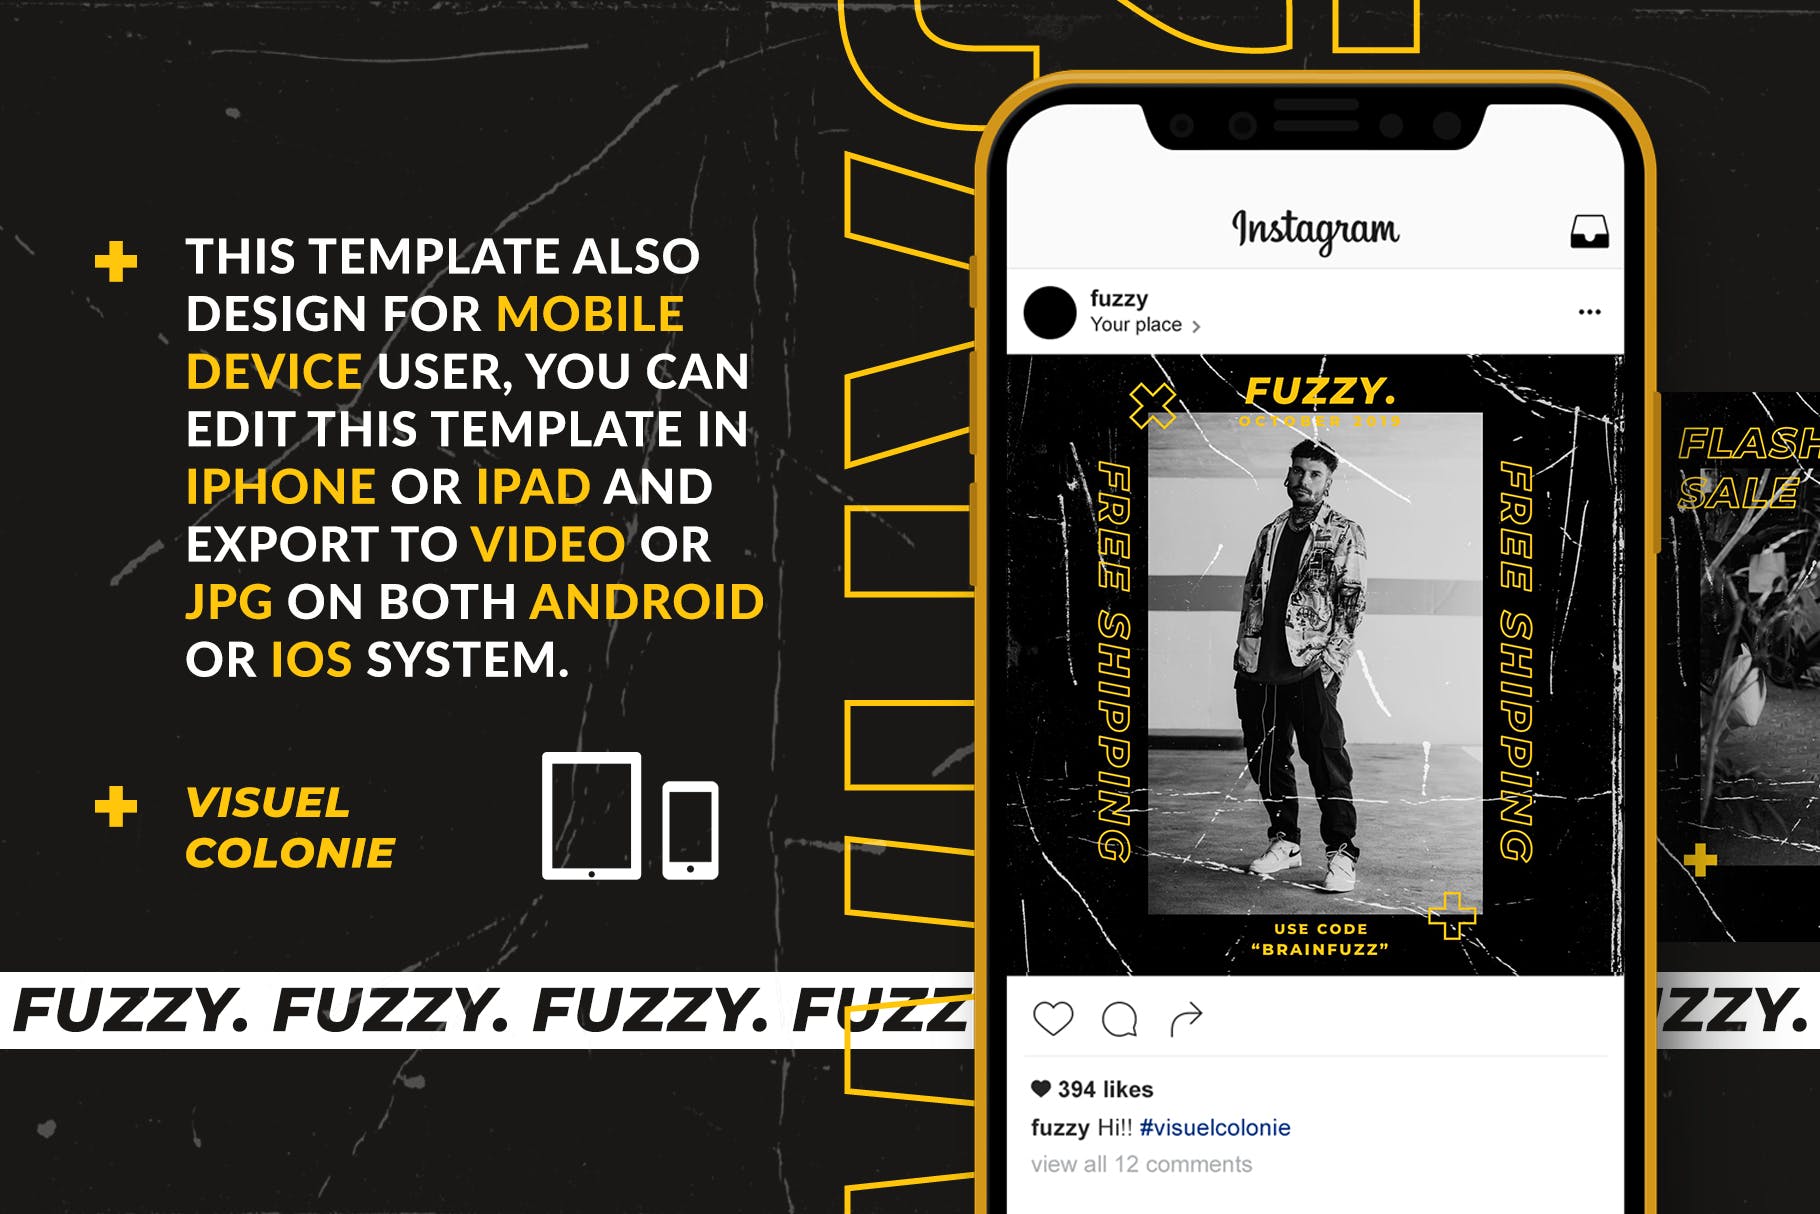 Instagram社交平台推广动图/动画设计PSD模板素材库精选 Fuzzy – Animated Instagram Template插图(1)